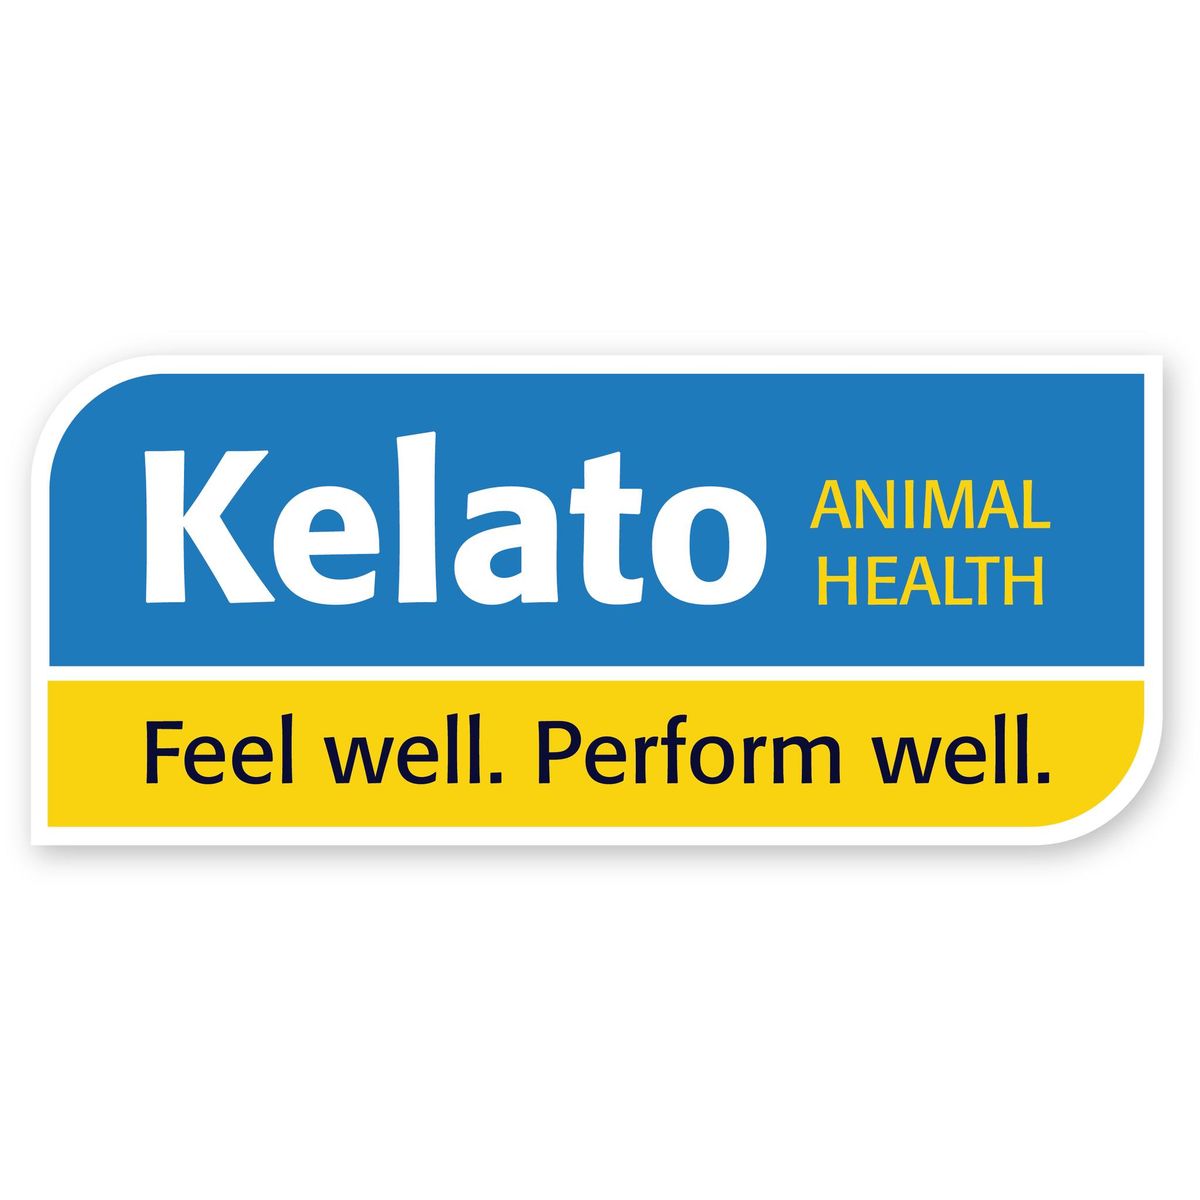 KELATO ANIMAL HEALTH HERE IN STORE